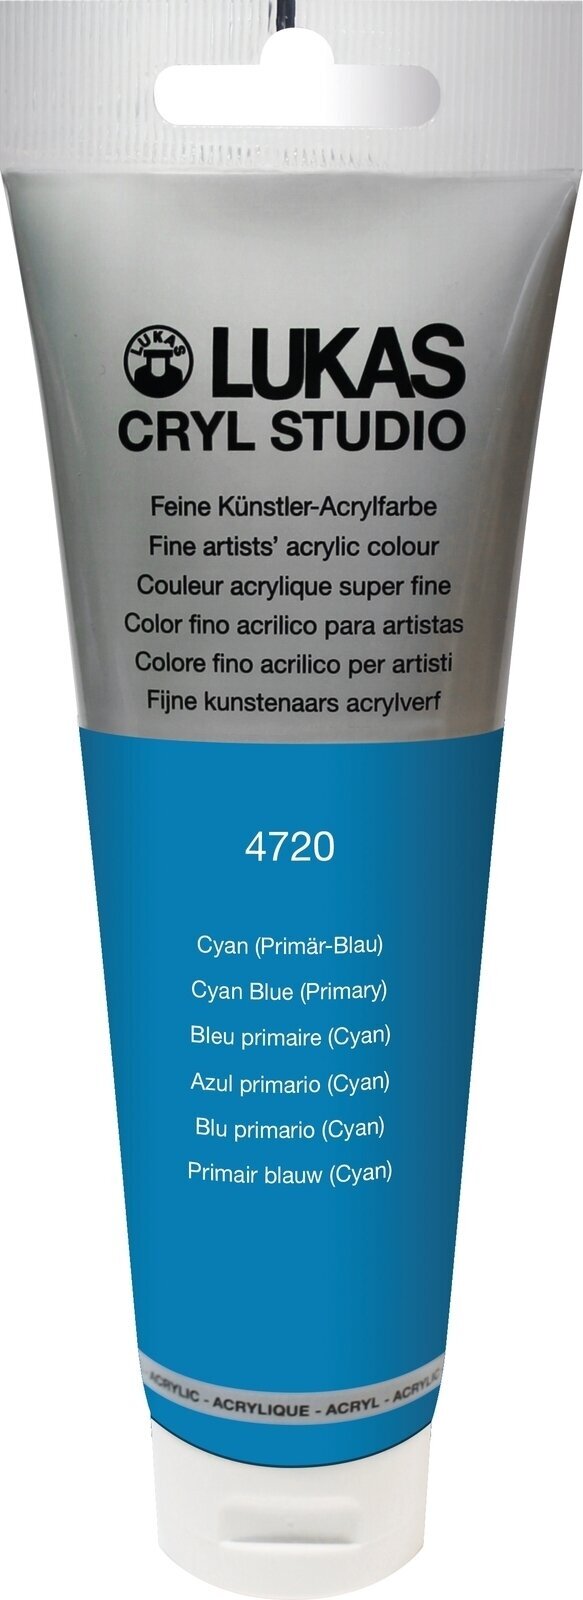 Farba akrylowa Lukas Cryl Studio Acrylic Paint Plastic Tube Farba akrylowa Cyan Blue (Primary) 125 ml